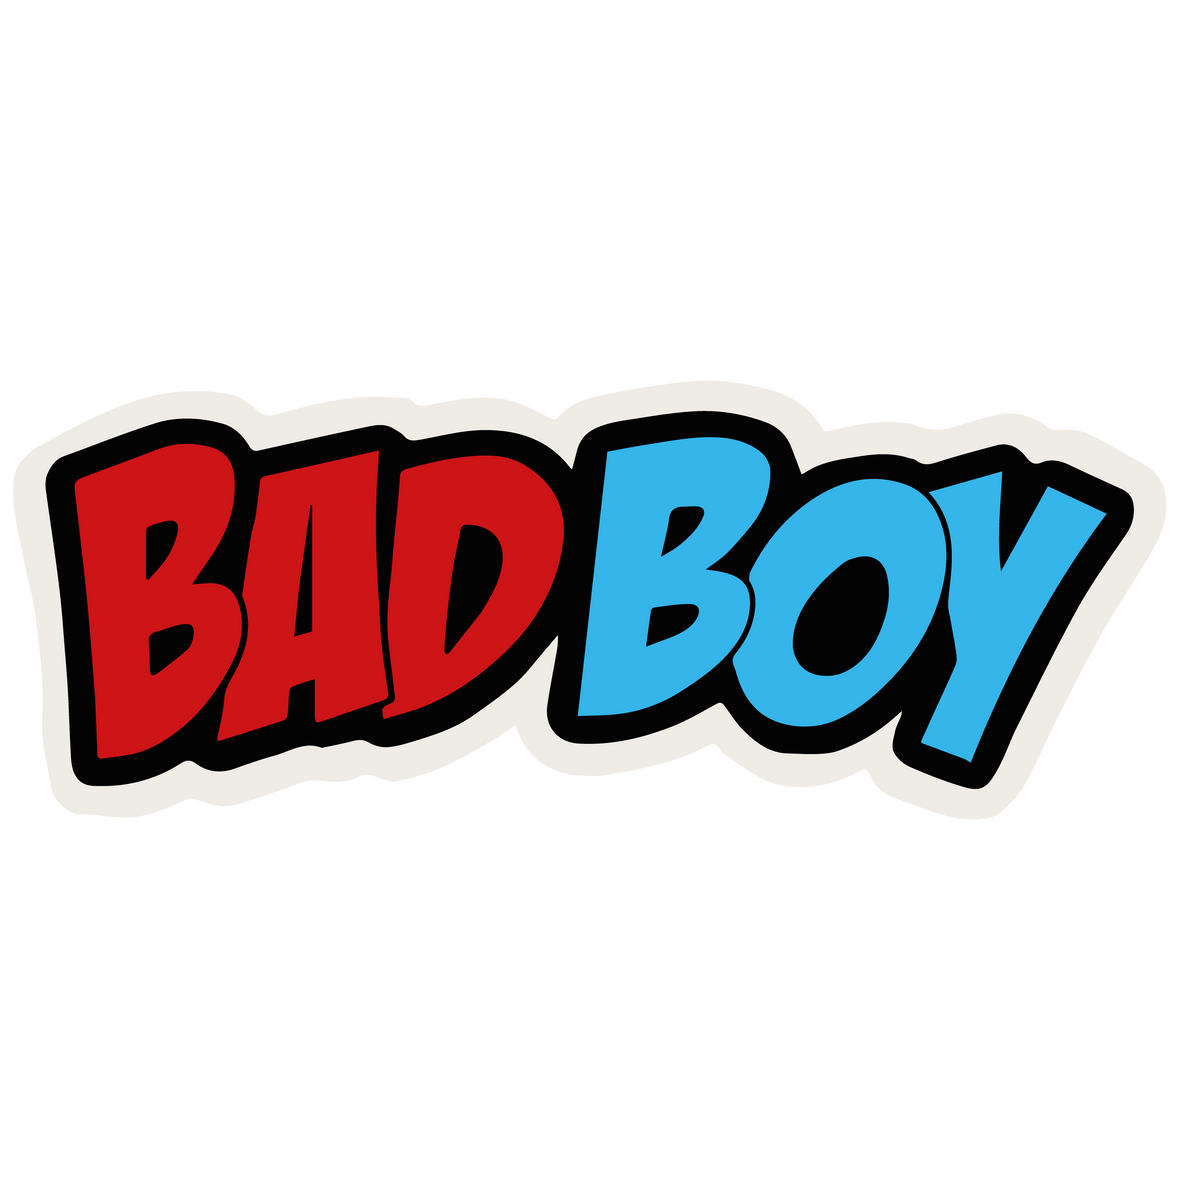 Billenlap "BAD BOY"